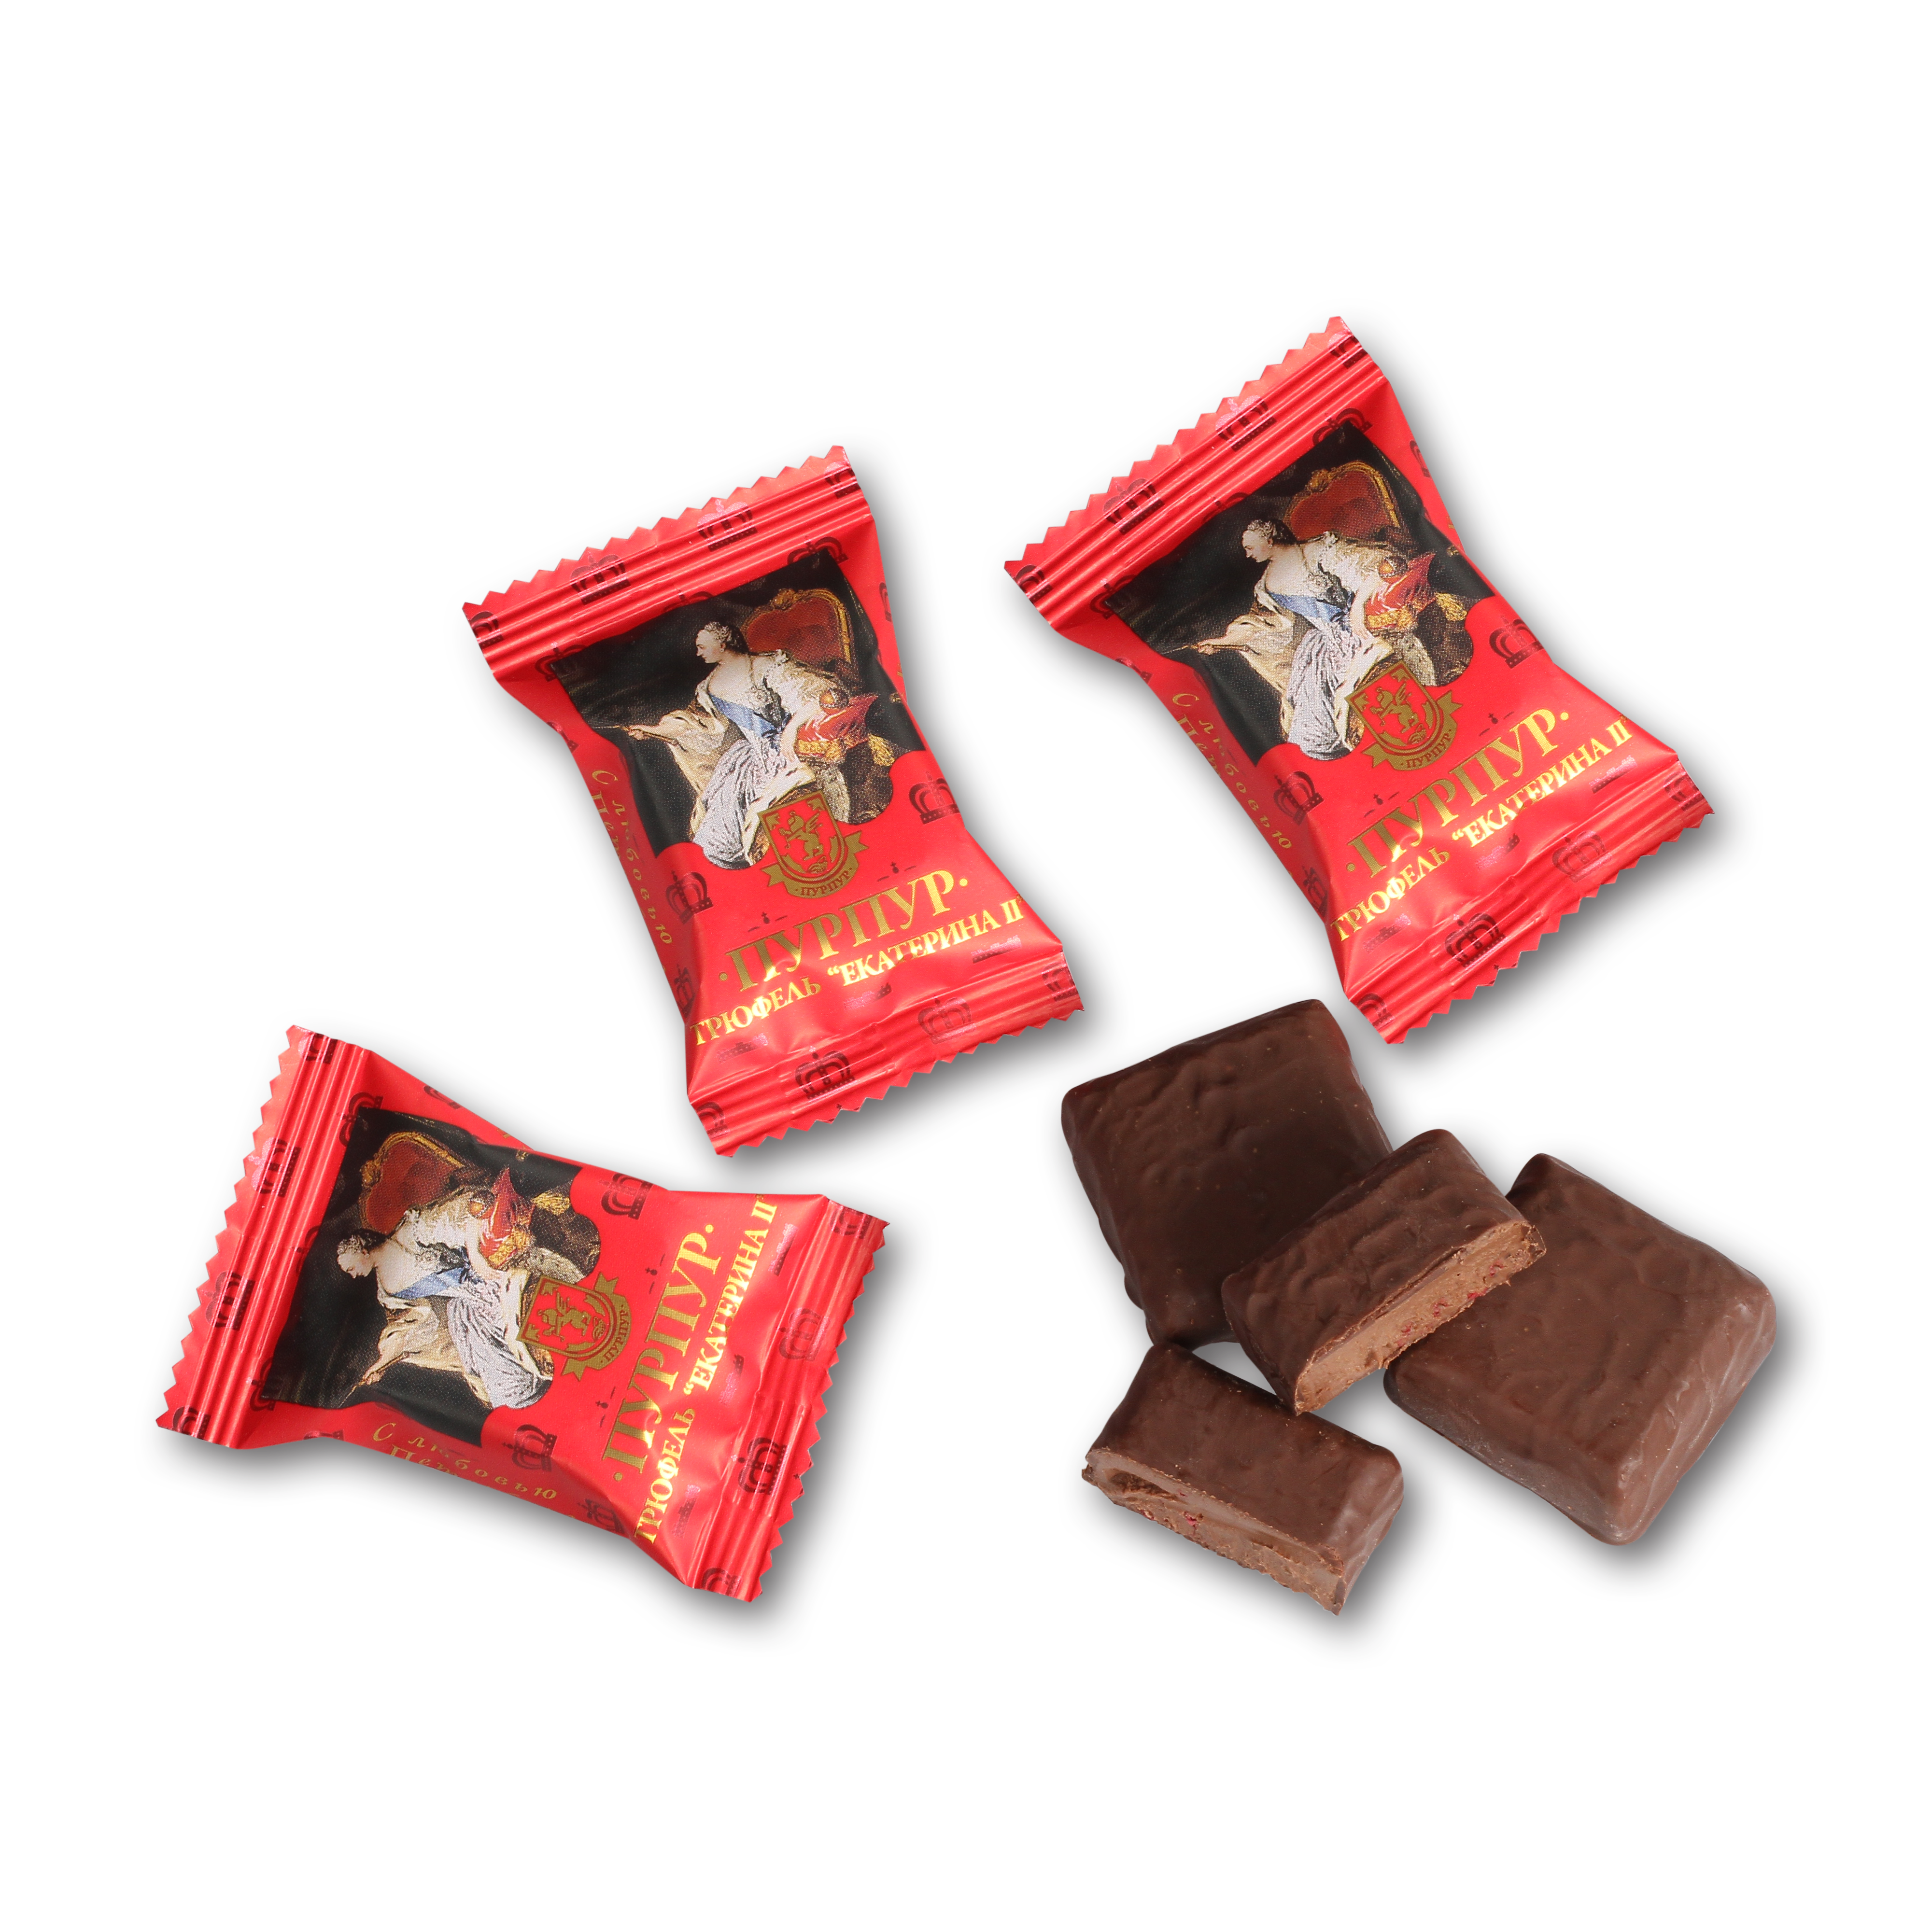 Екатерина II (трюфели в темном шоколаде 55% какао)